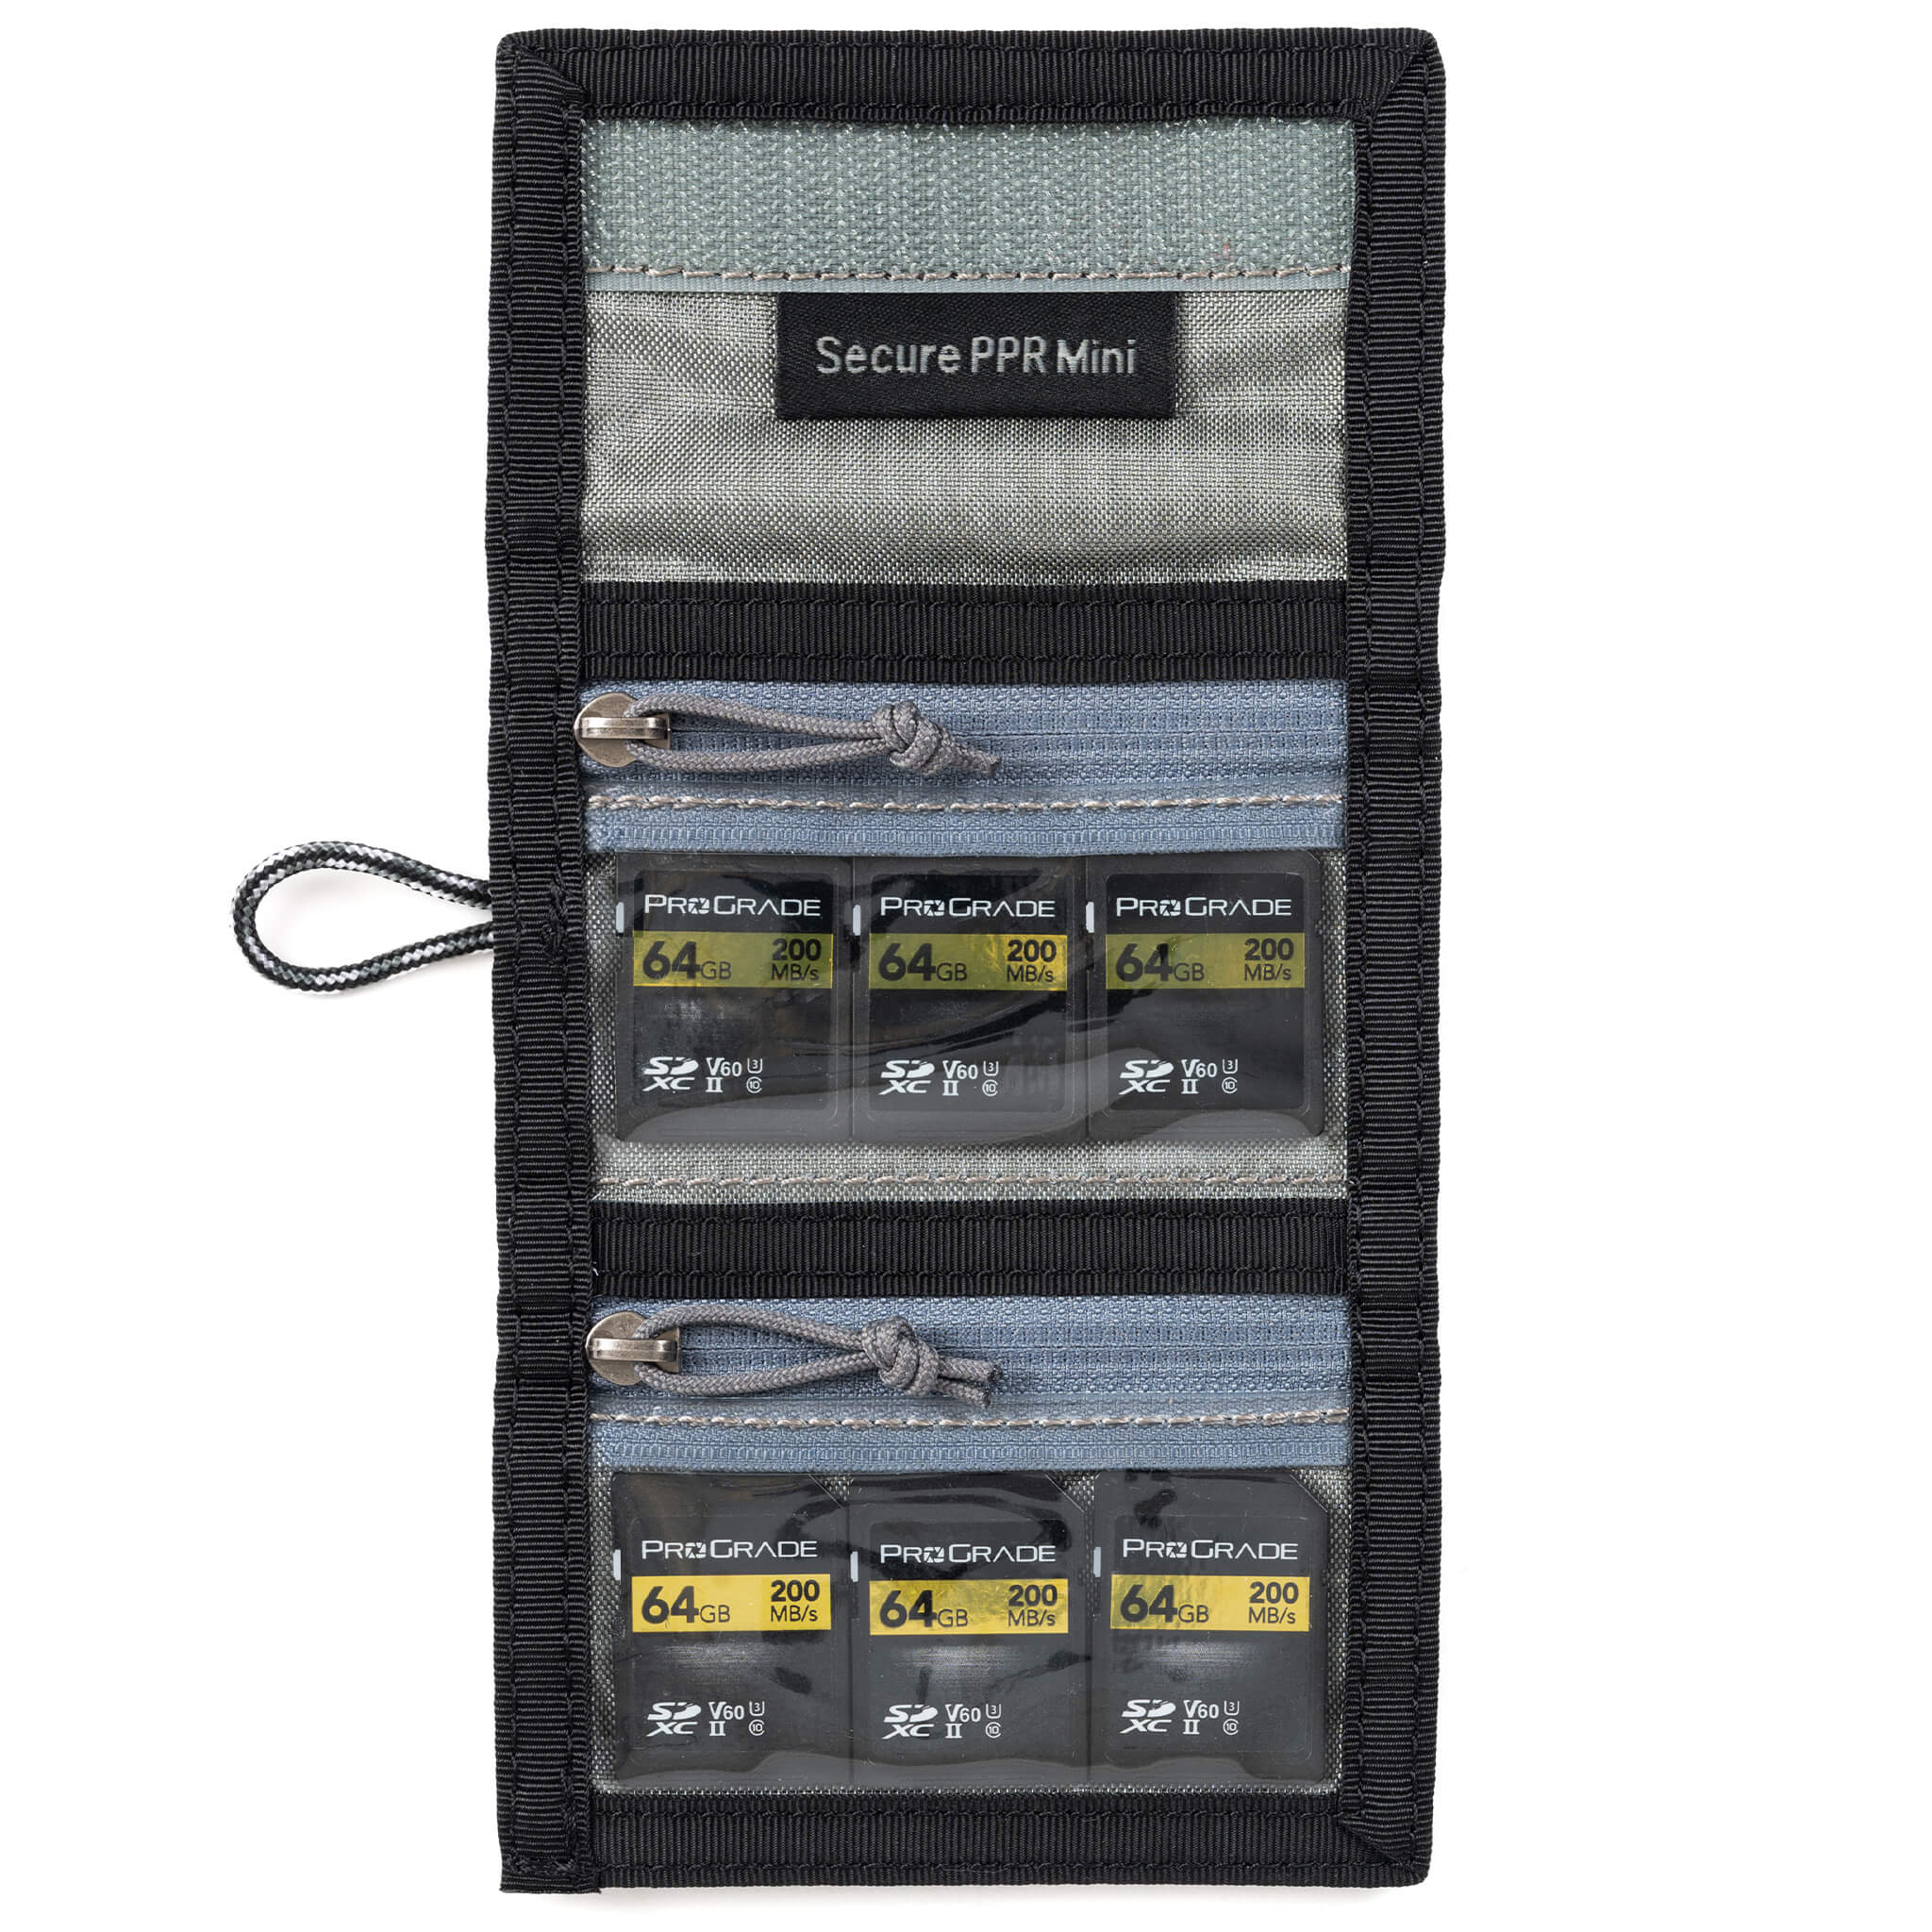 The Secure Pixel Pocket Rocket Mini has zippered pockets providing maximum security for multiple card sizes.